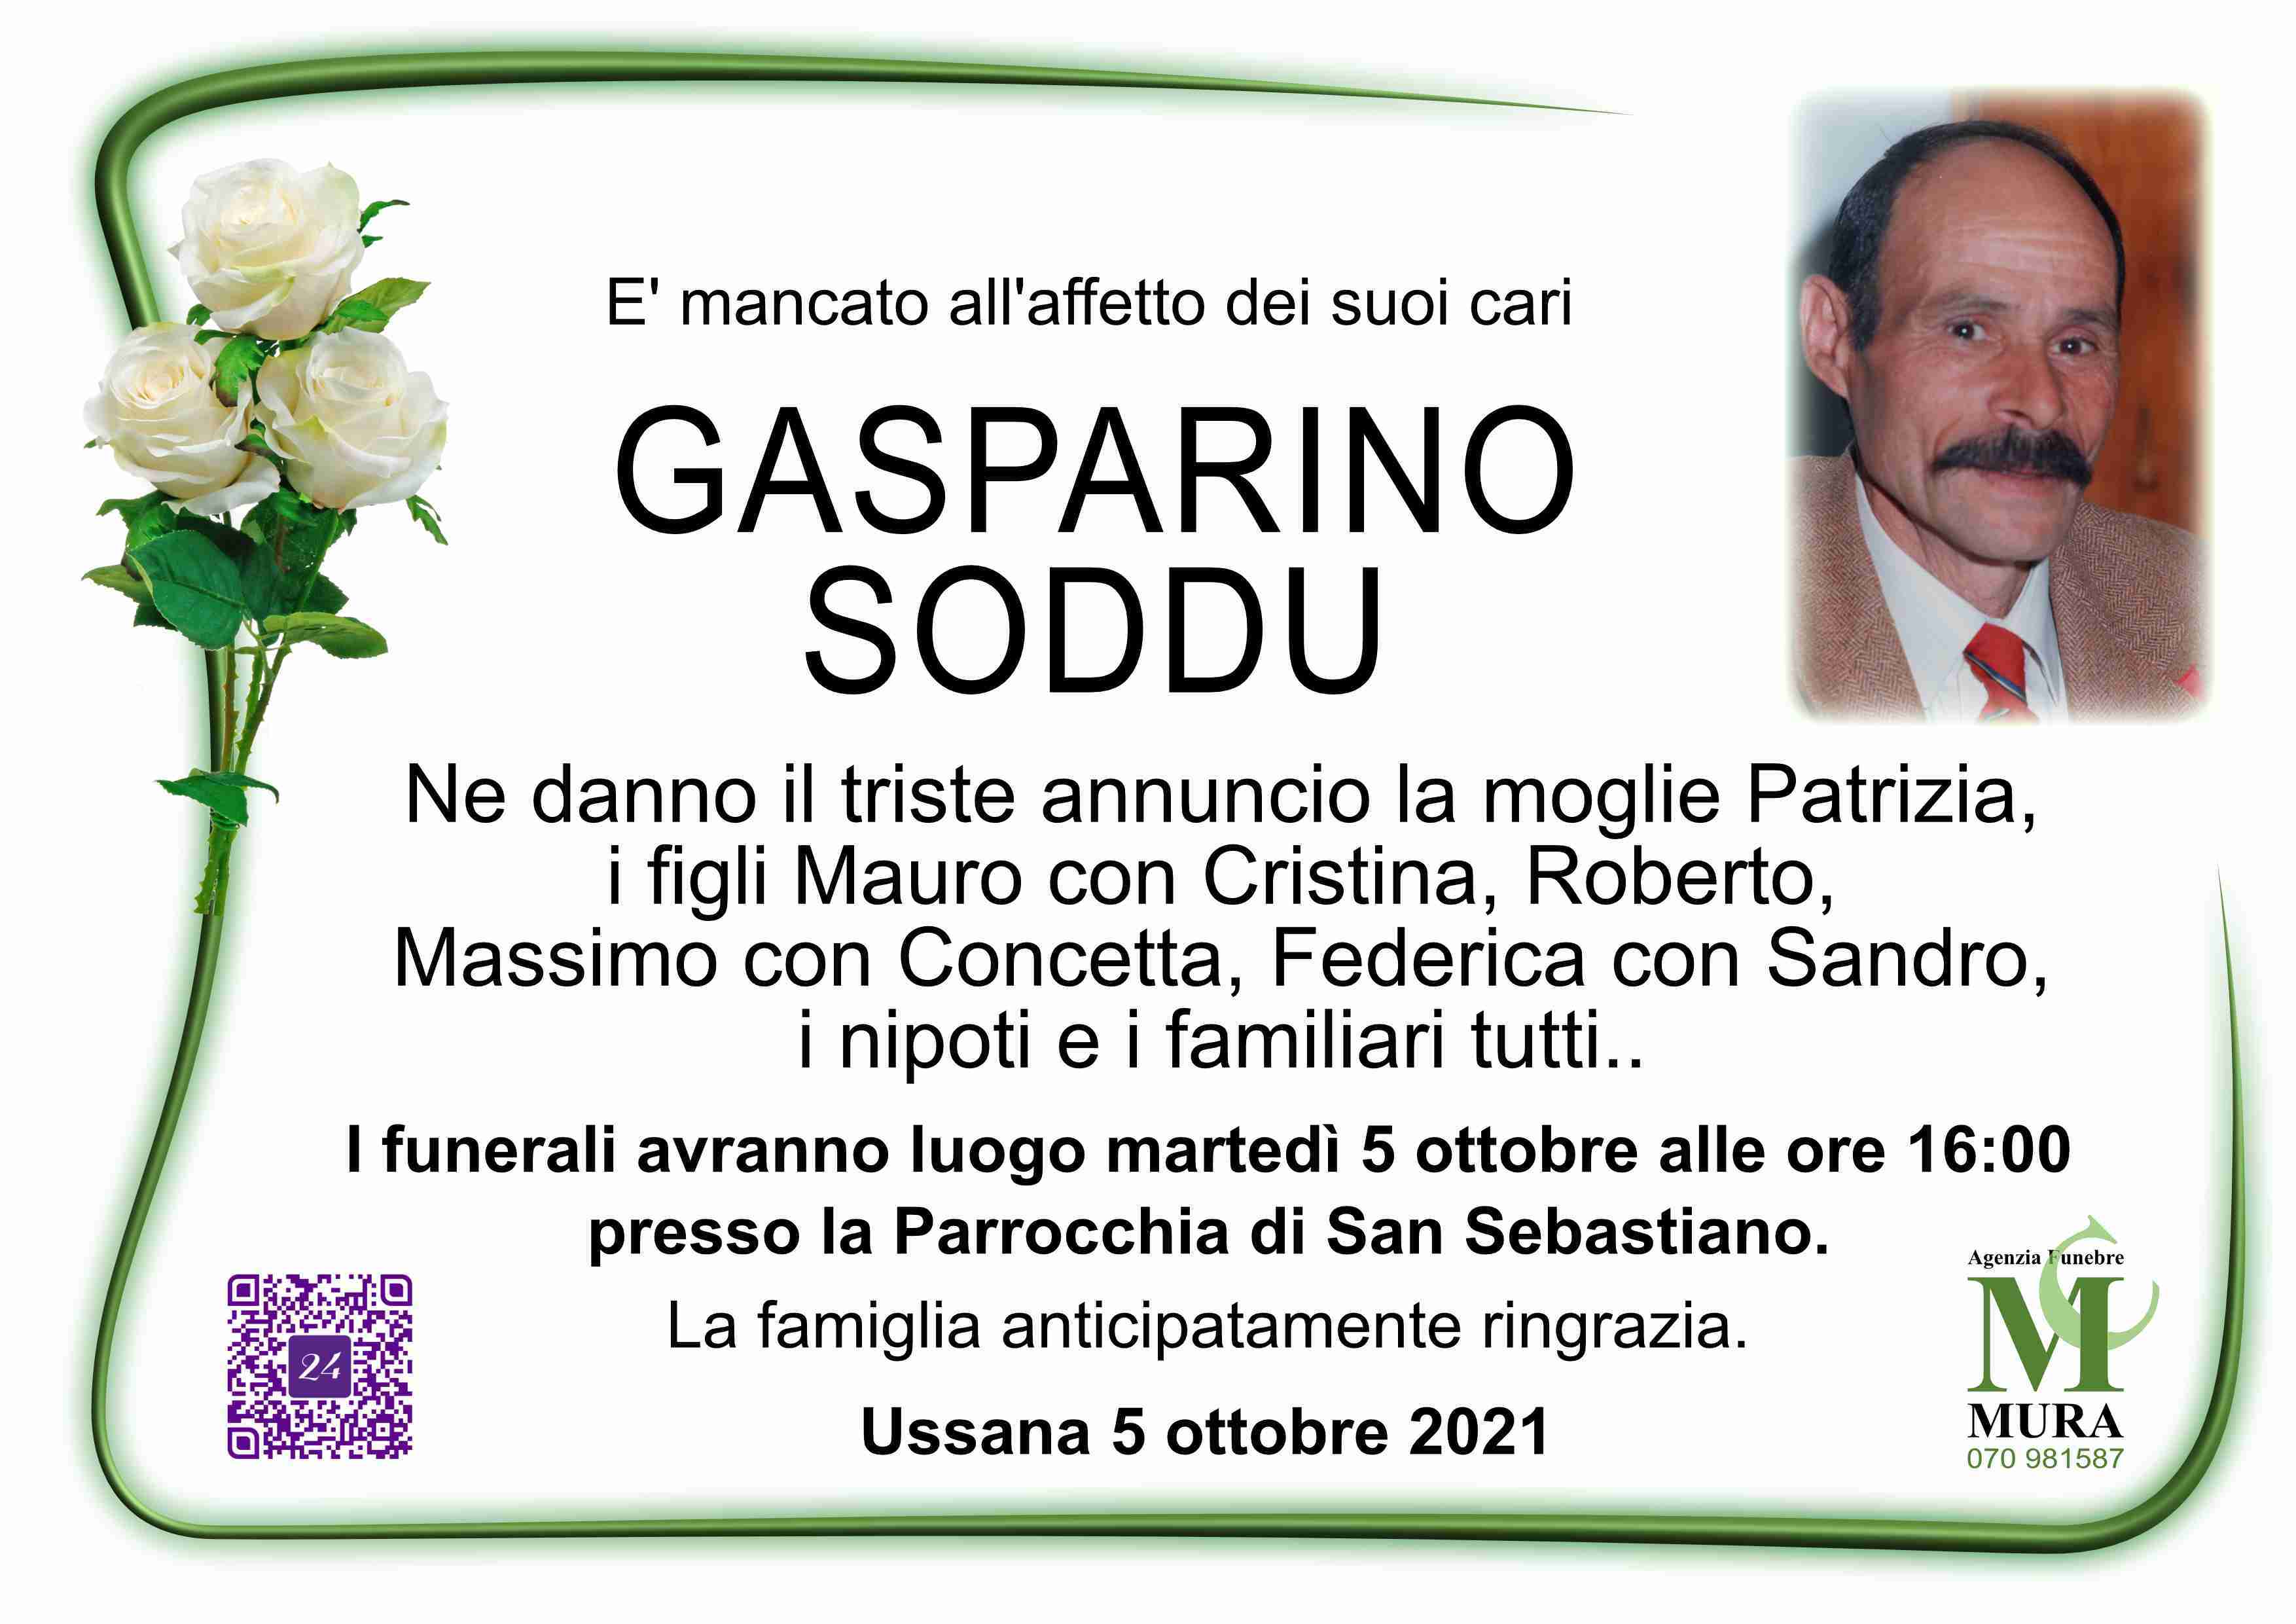 Gasparino Soddu